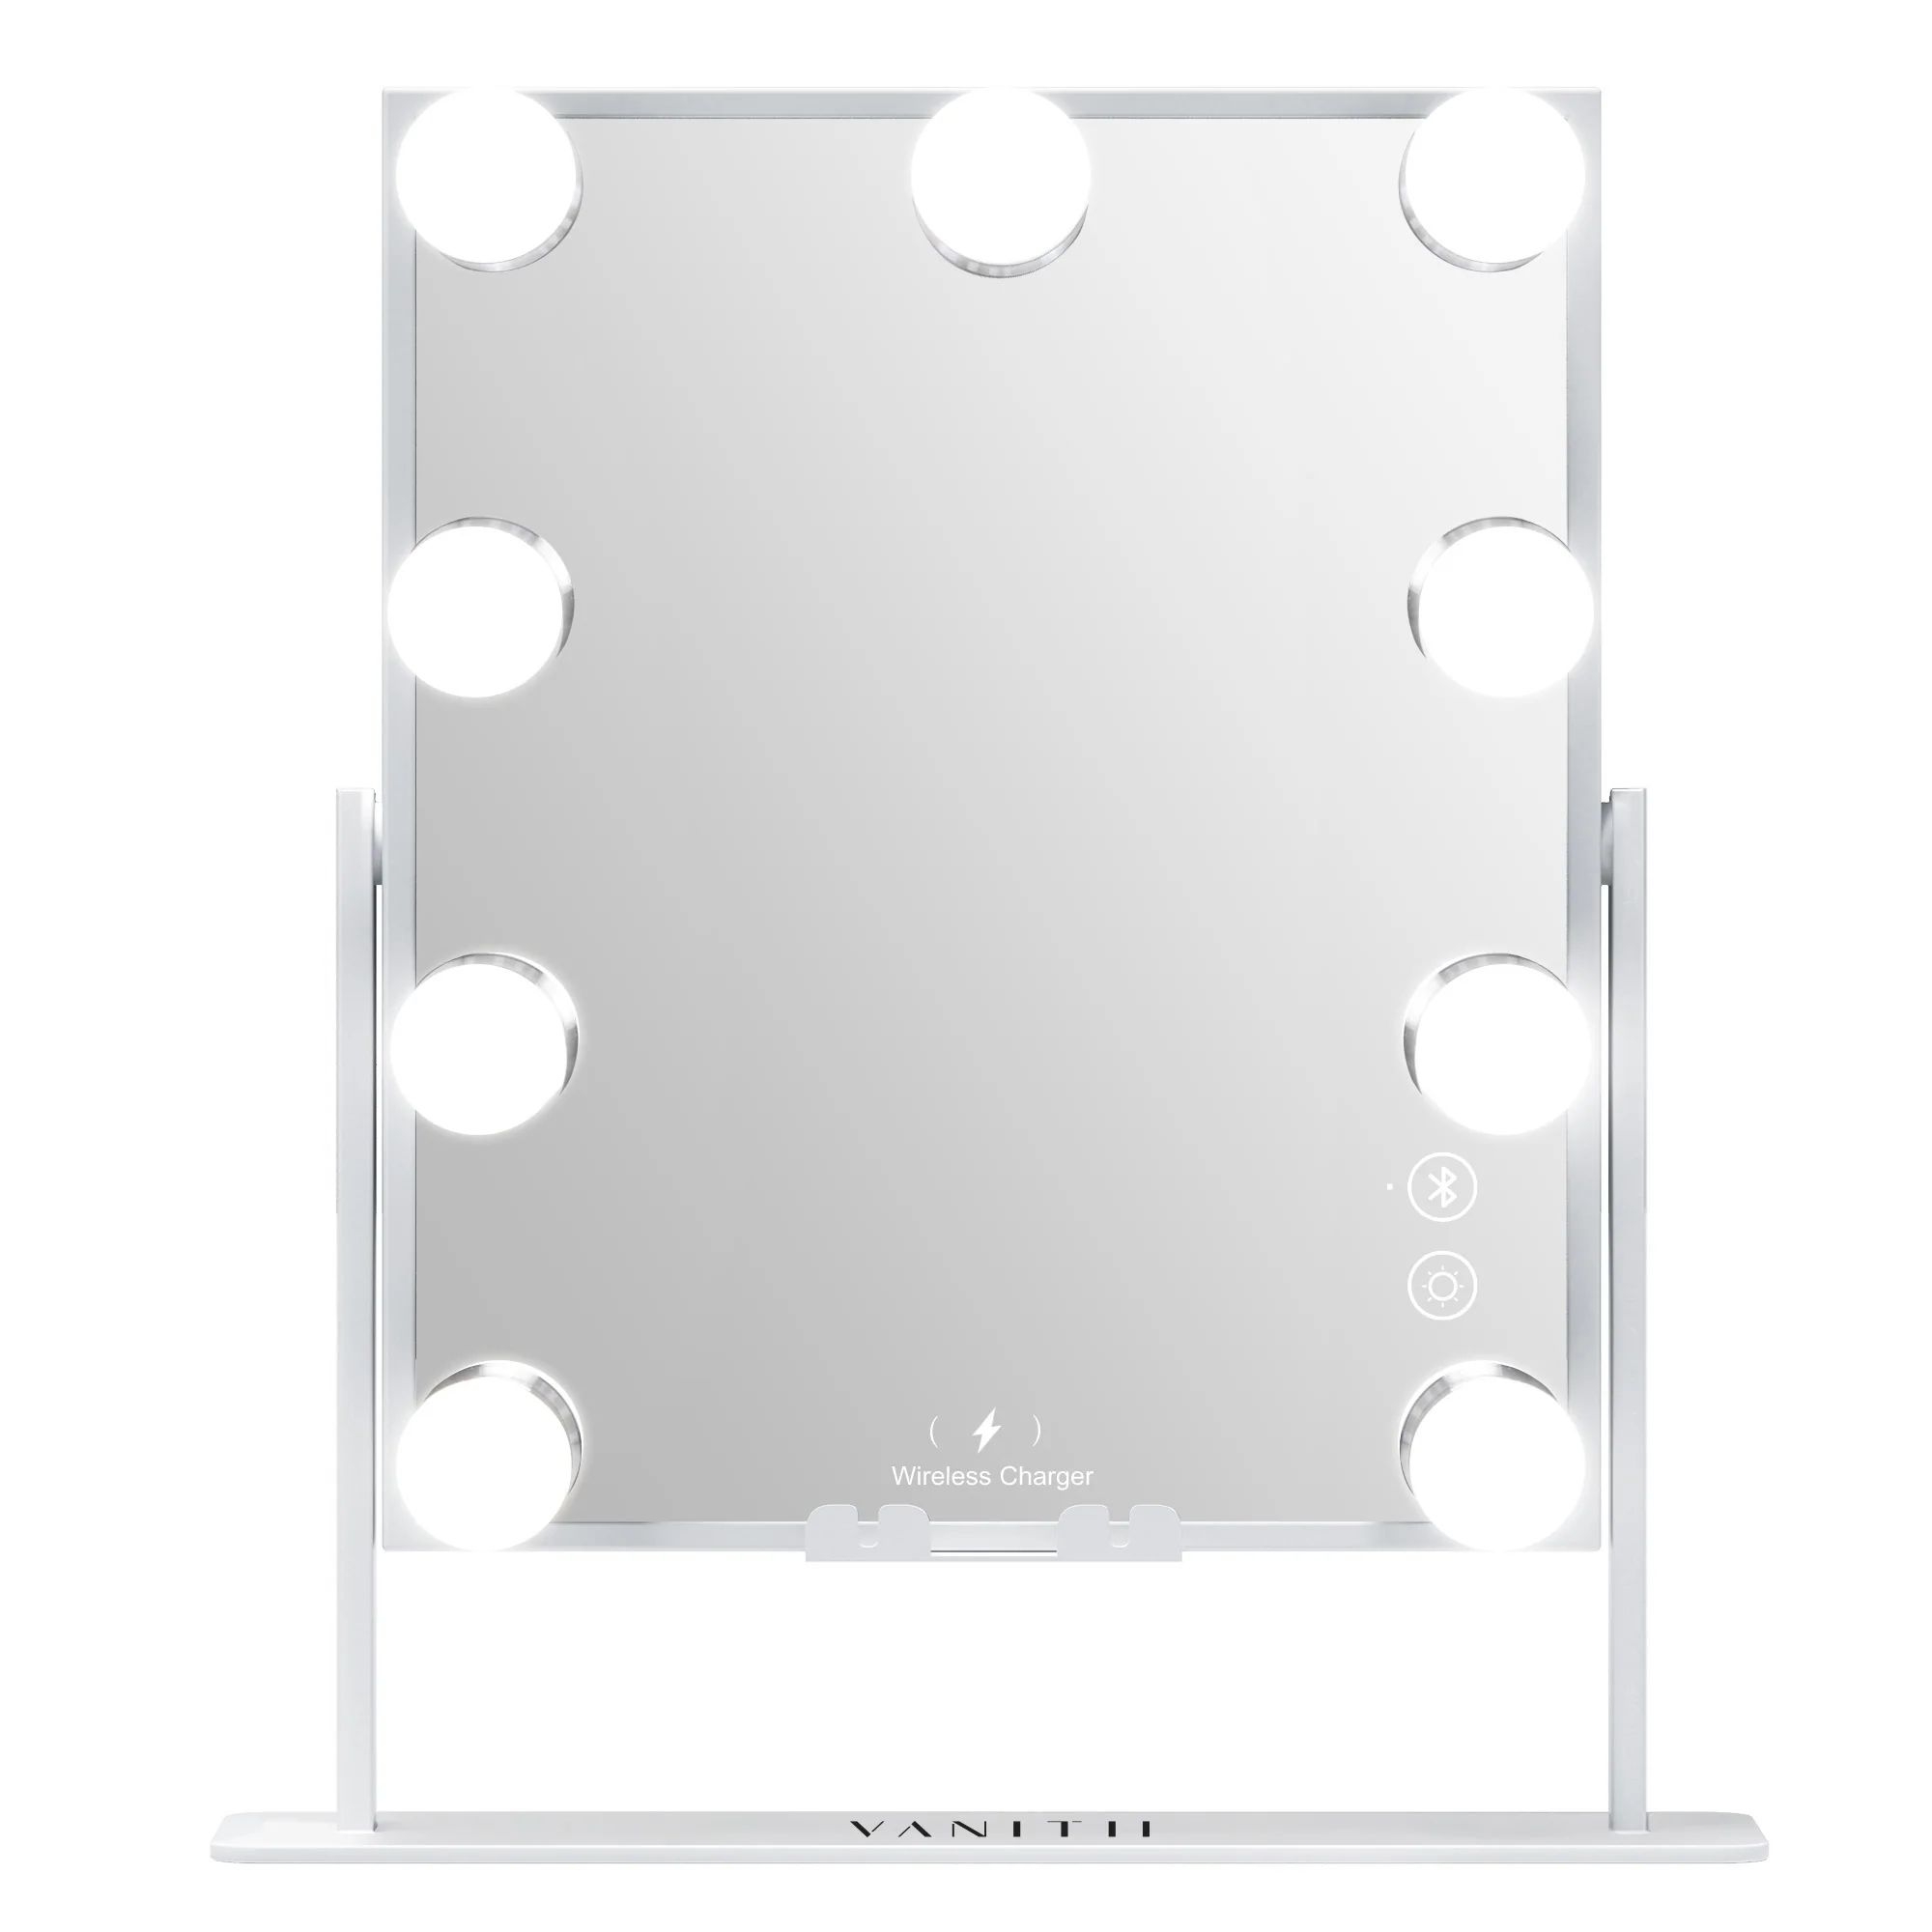 Opi 12 X 14 Vanity Mirror, Wireless Charging, Smart Touch Control, White - Saltoro Sherpi